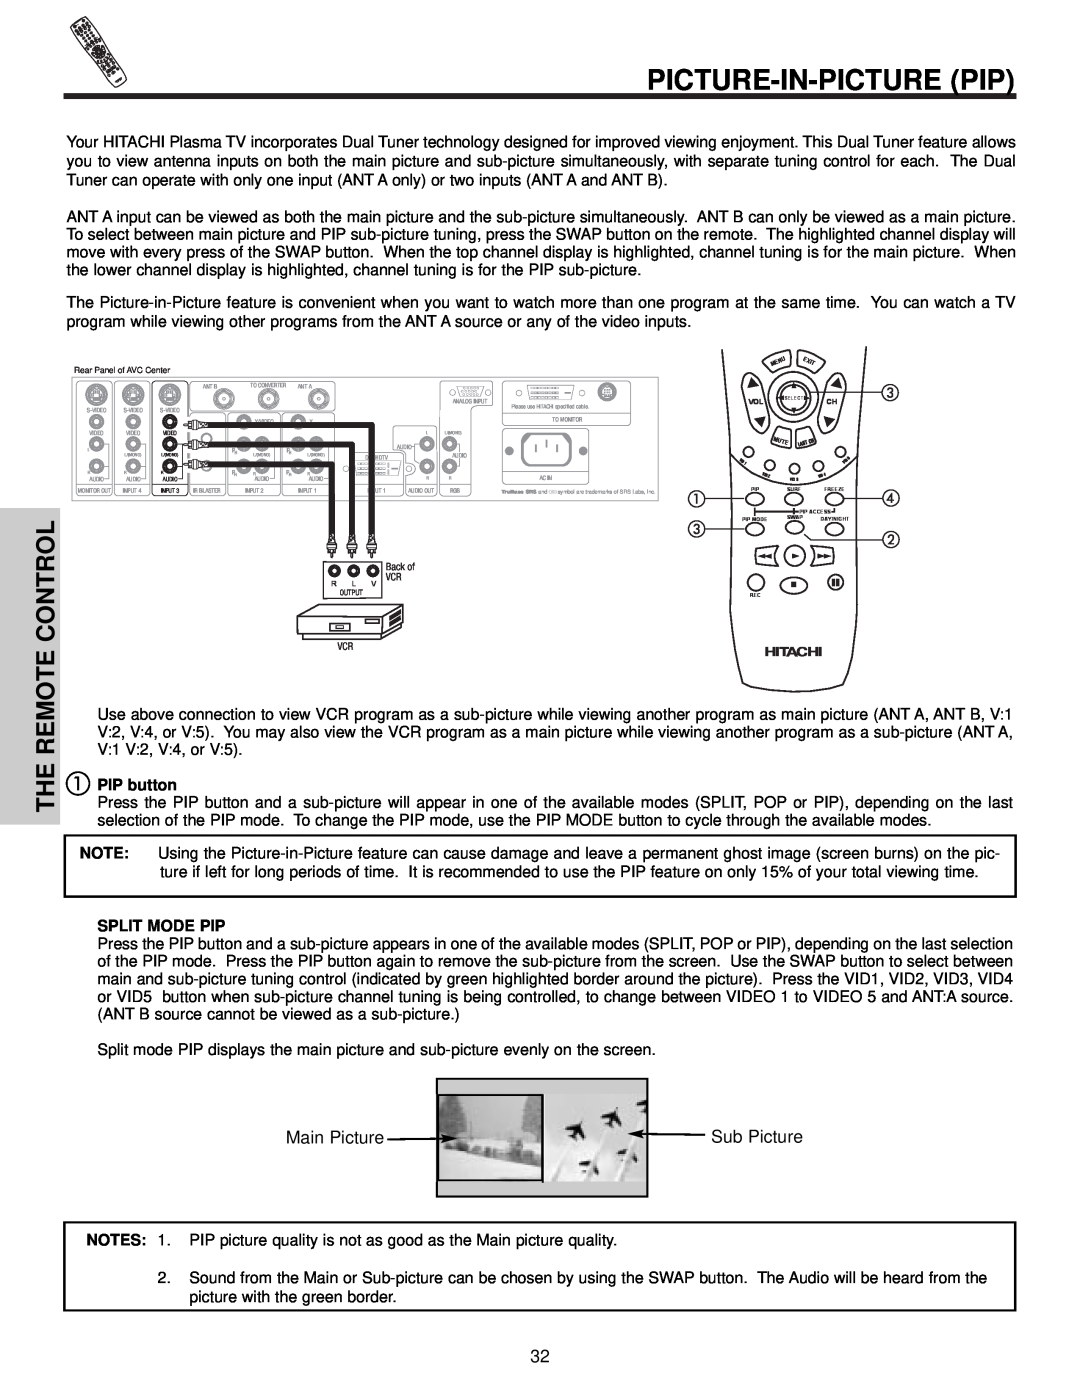 Hitachi 32HDX60 important safety instructions Picture-In-Picture Pip, Main Picture, Sub Picture, PIP button, Split Mode Pip 